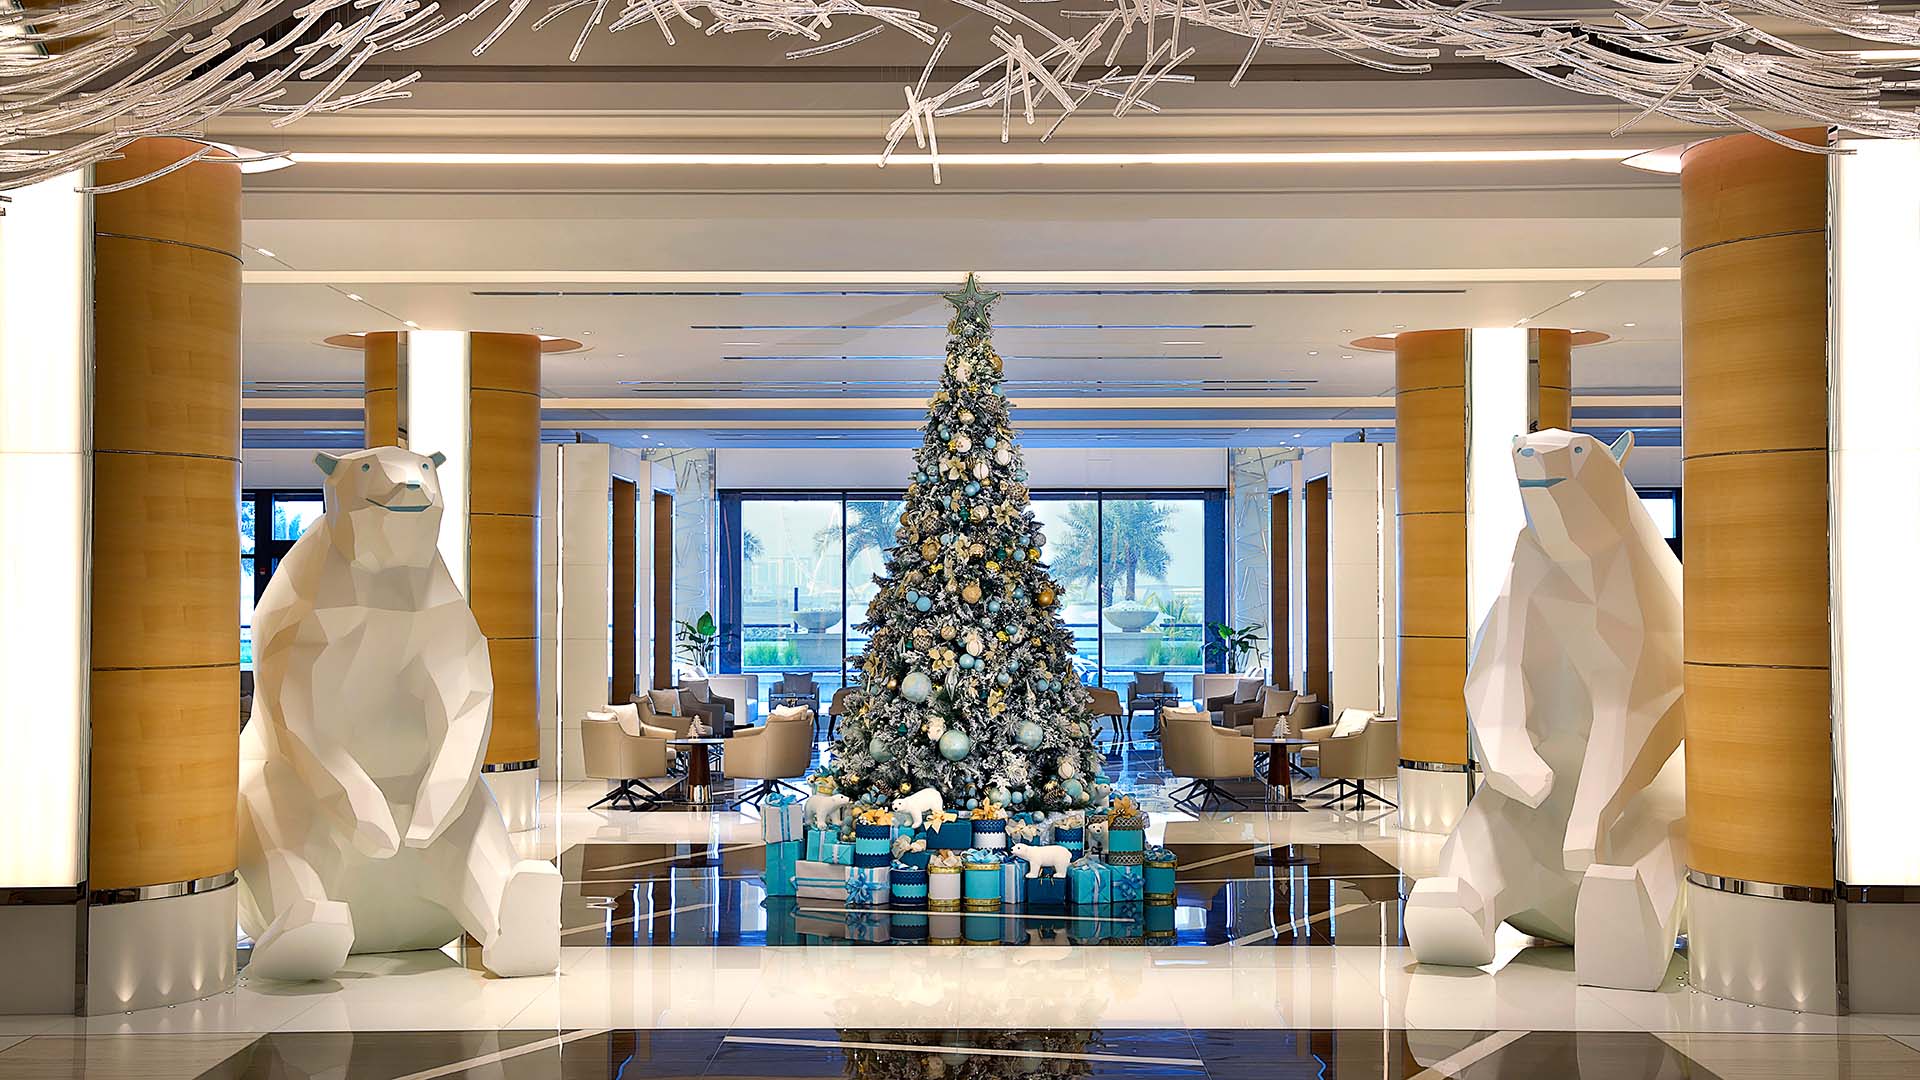 The lobby of Marriott Resort Palm Jumeirah, Dubai with festive decorations, including a Christmas tree and large polar bear statues